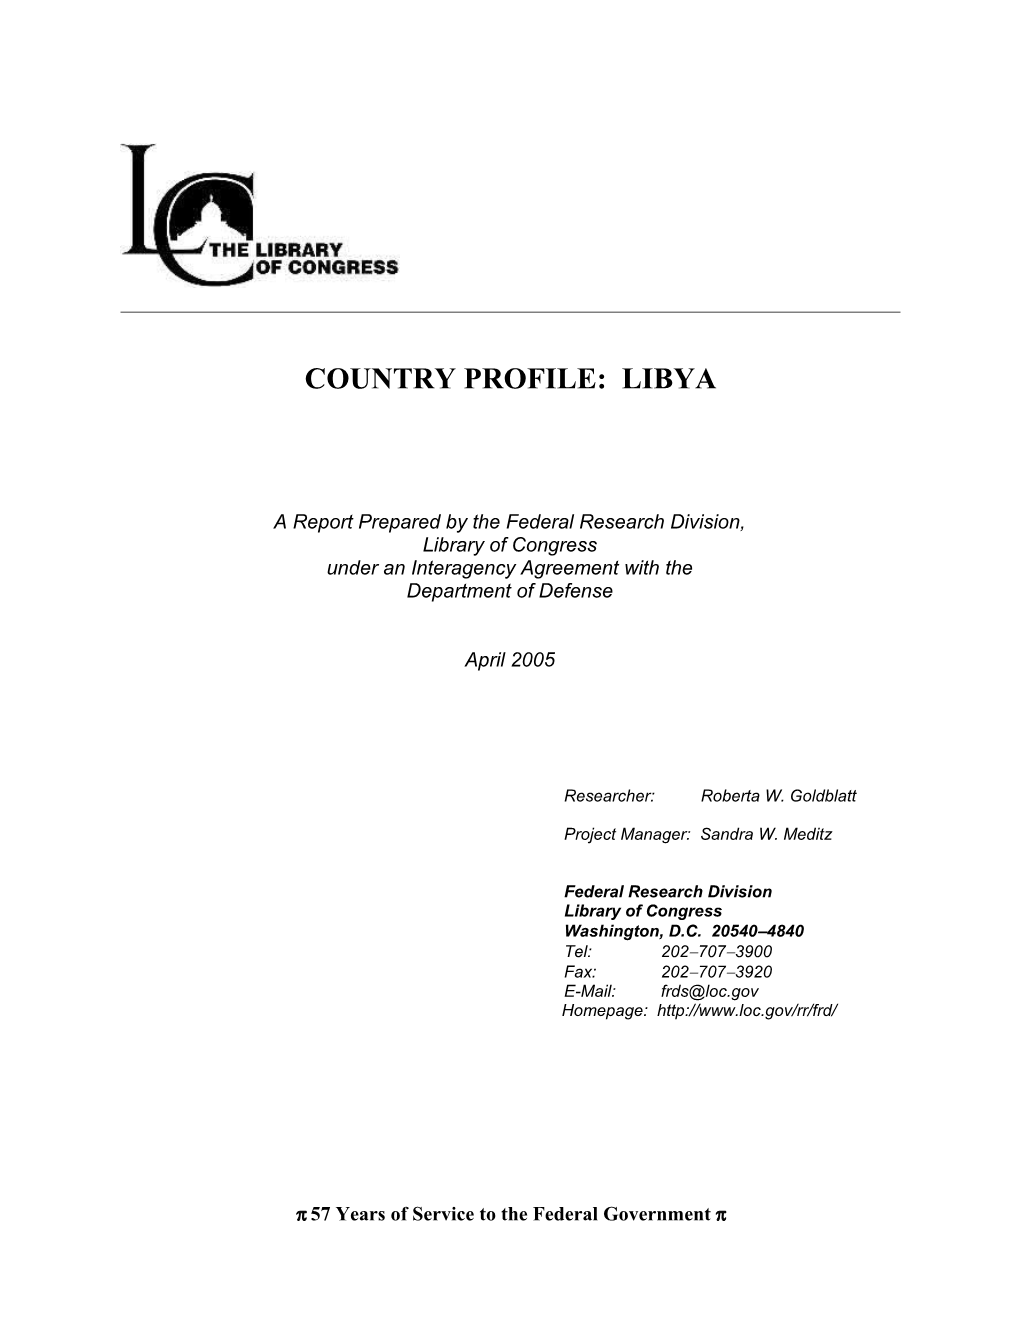 Country Profile: Libya